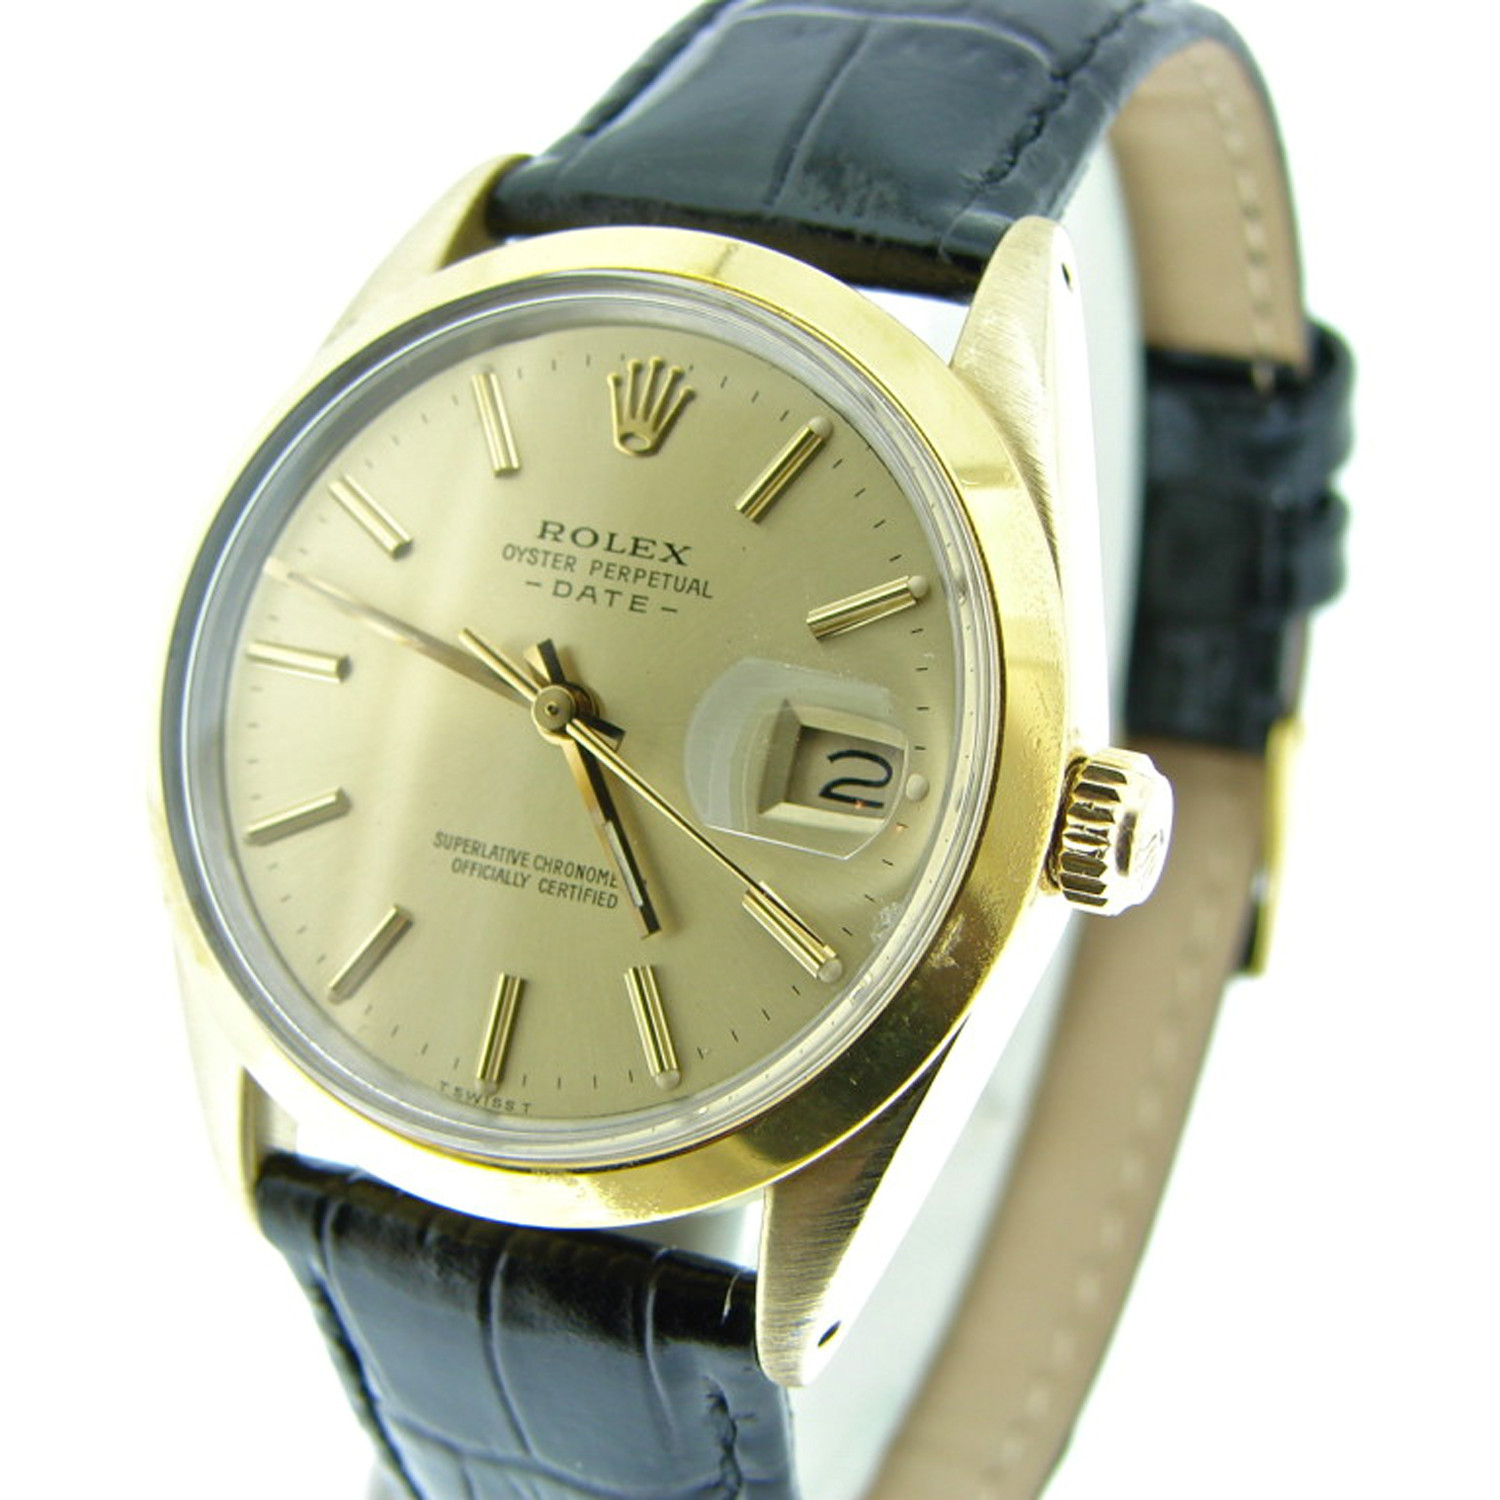 Date Automatic // 15505 // 8369310 // c.1980's - Vintage Rolex Watches ...